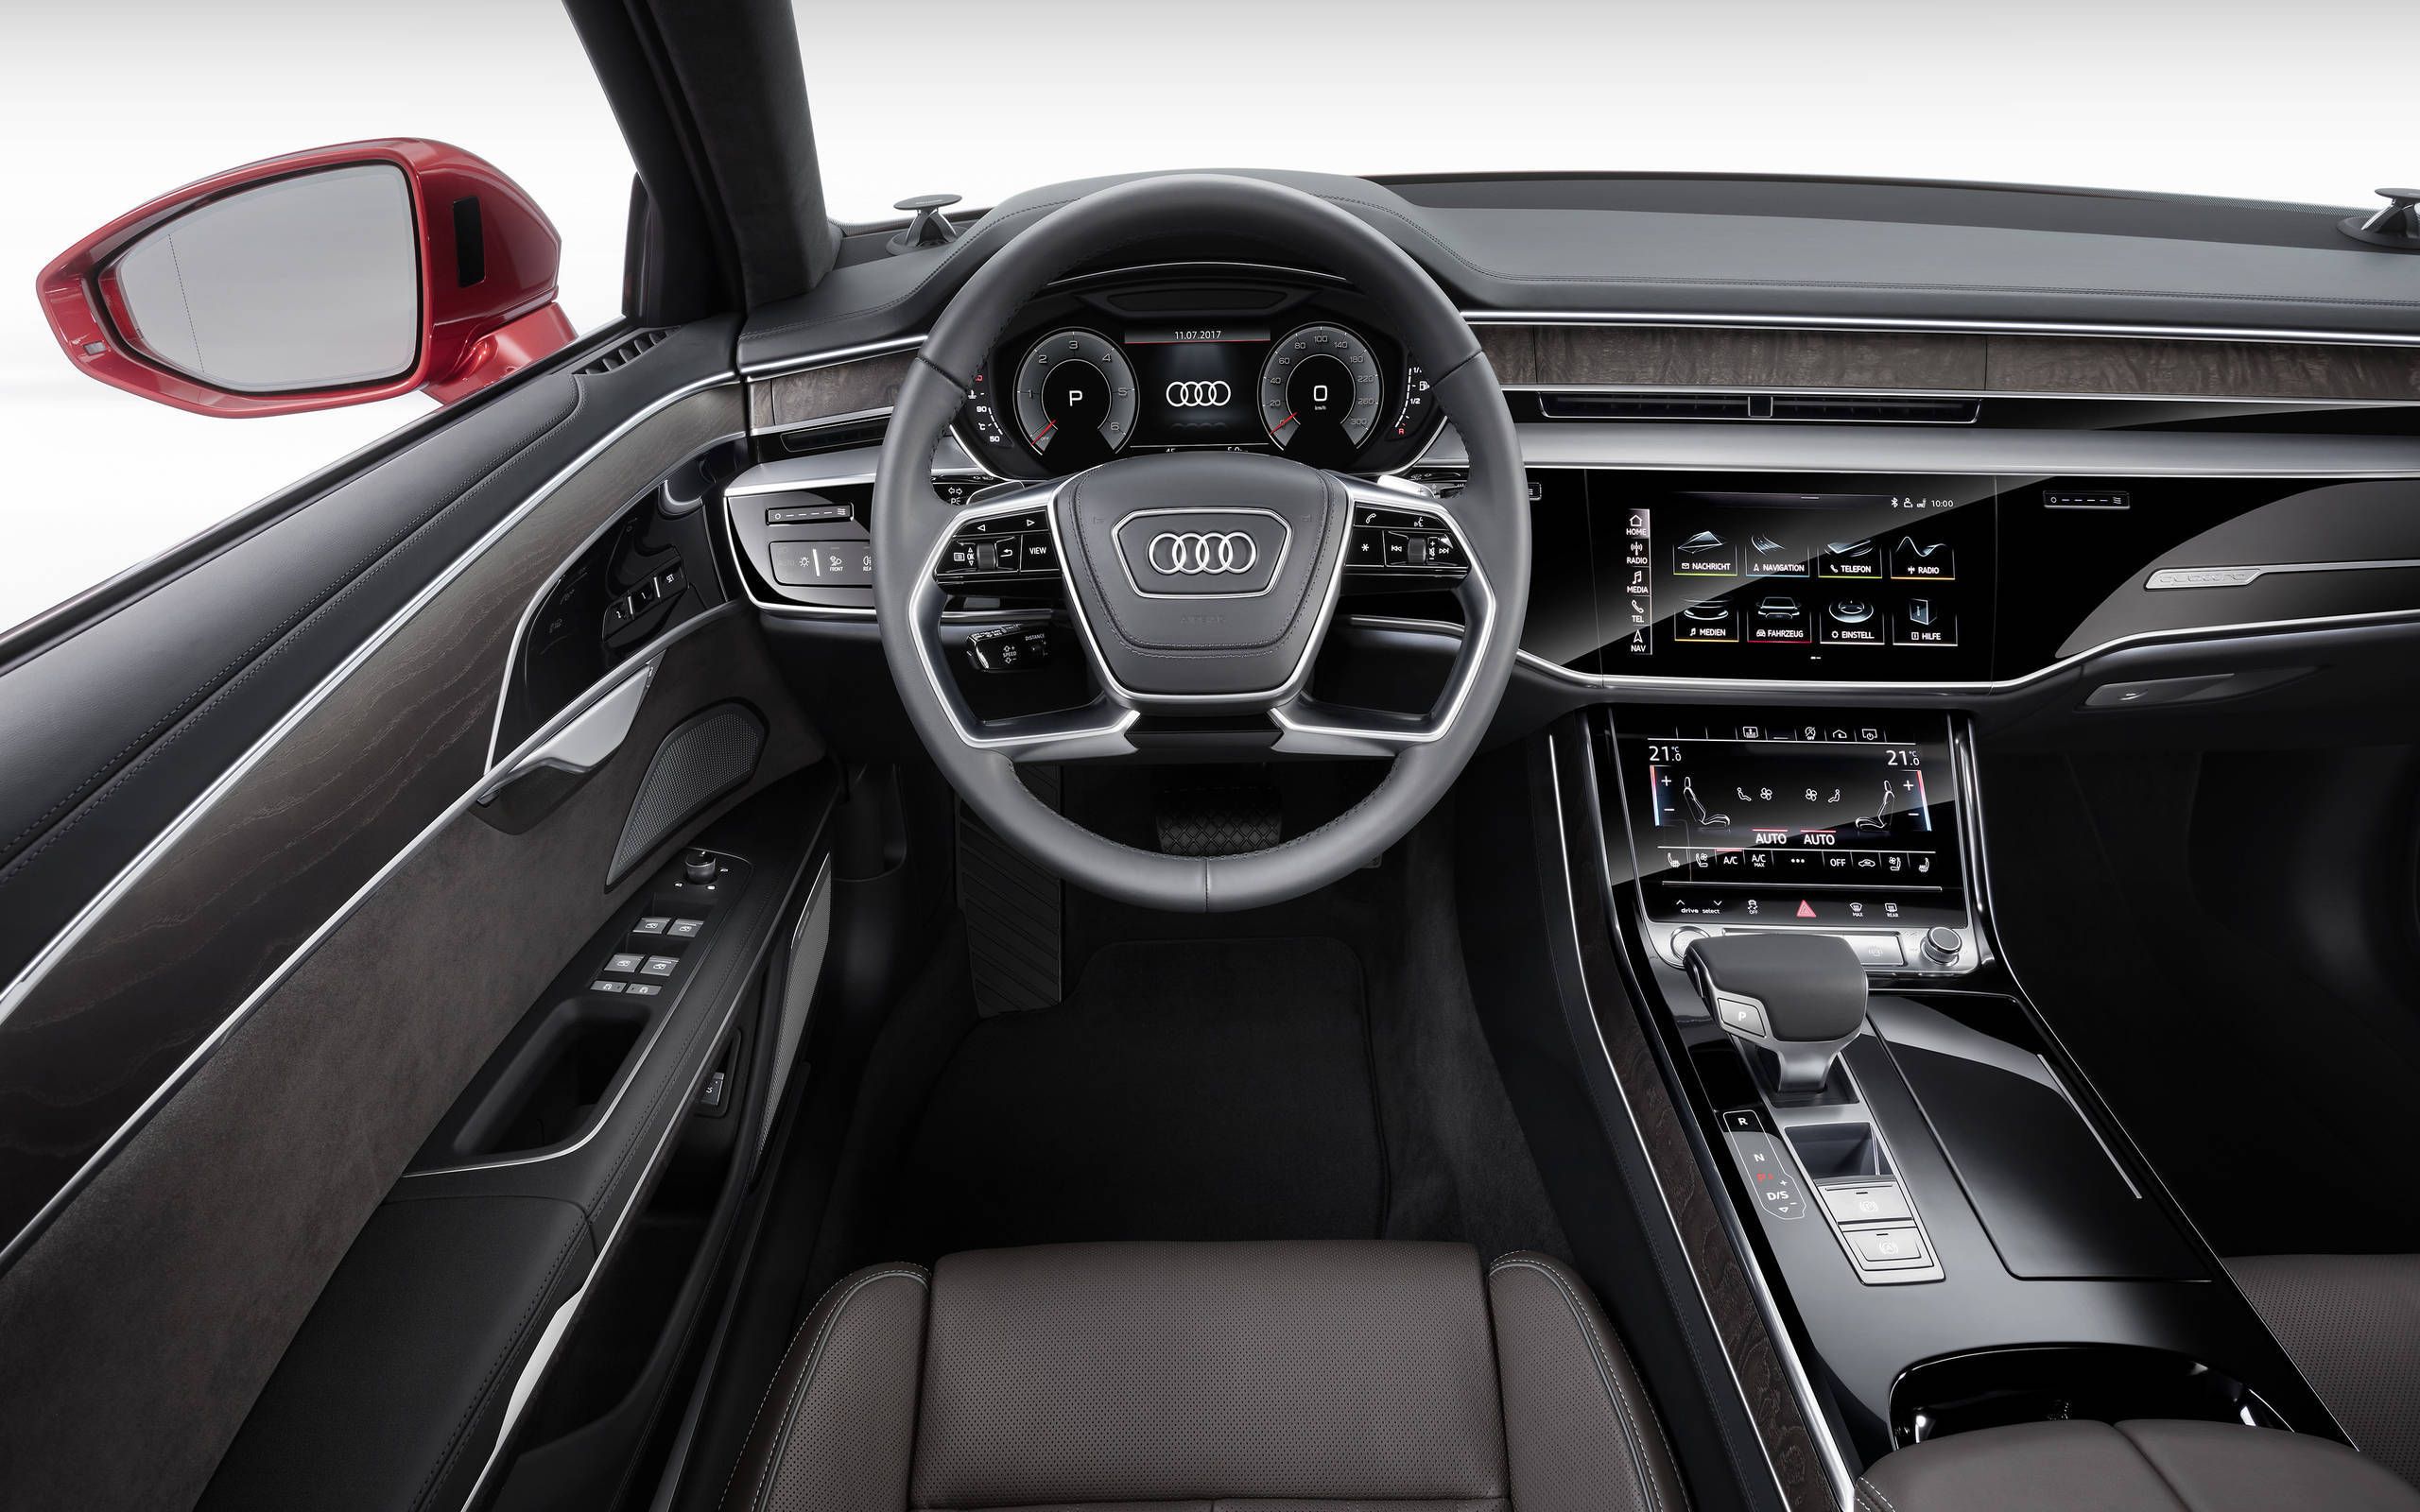 Gallery: 2019 Audi A8 interior